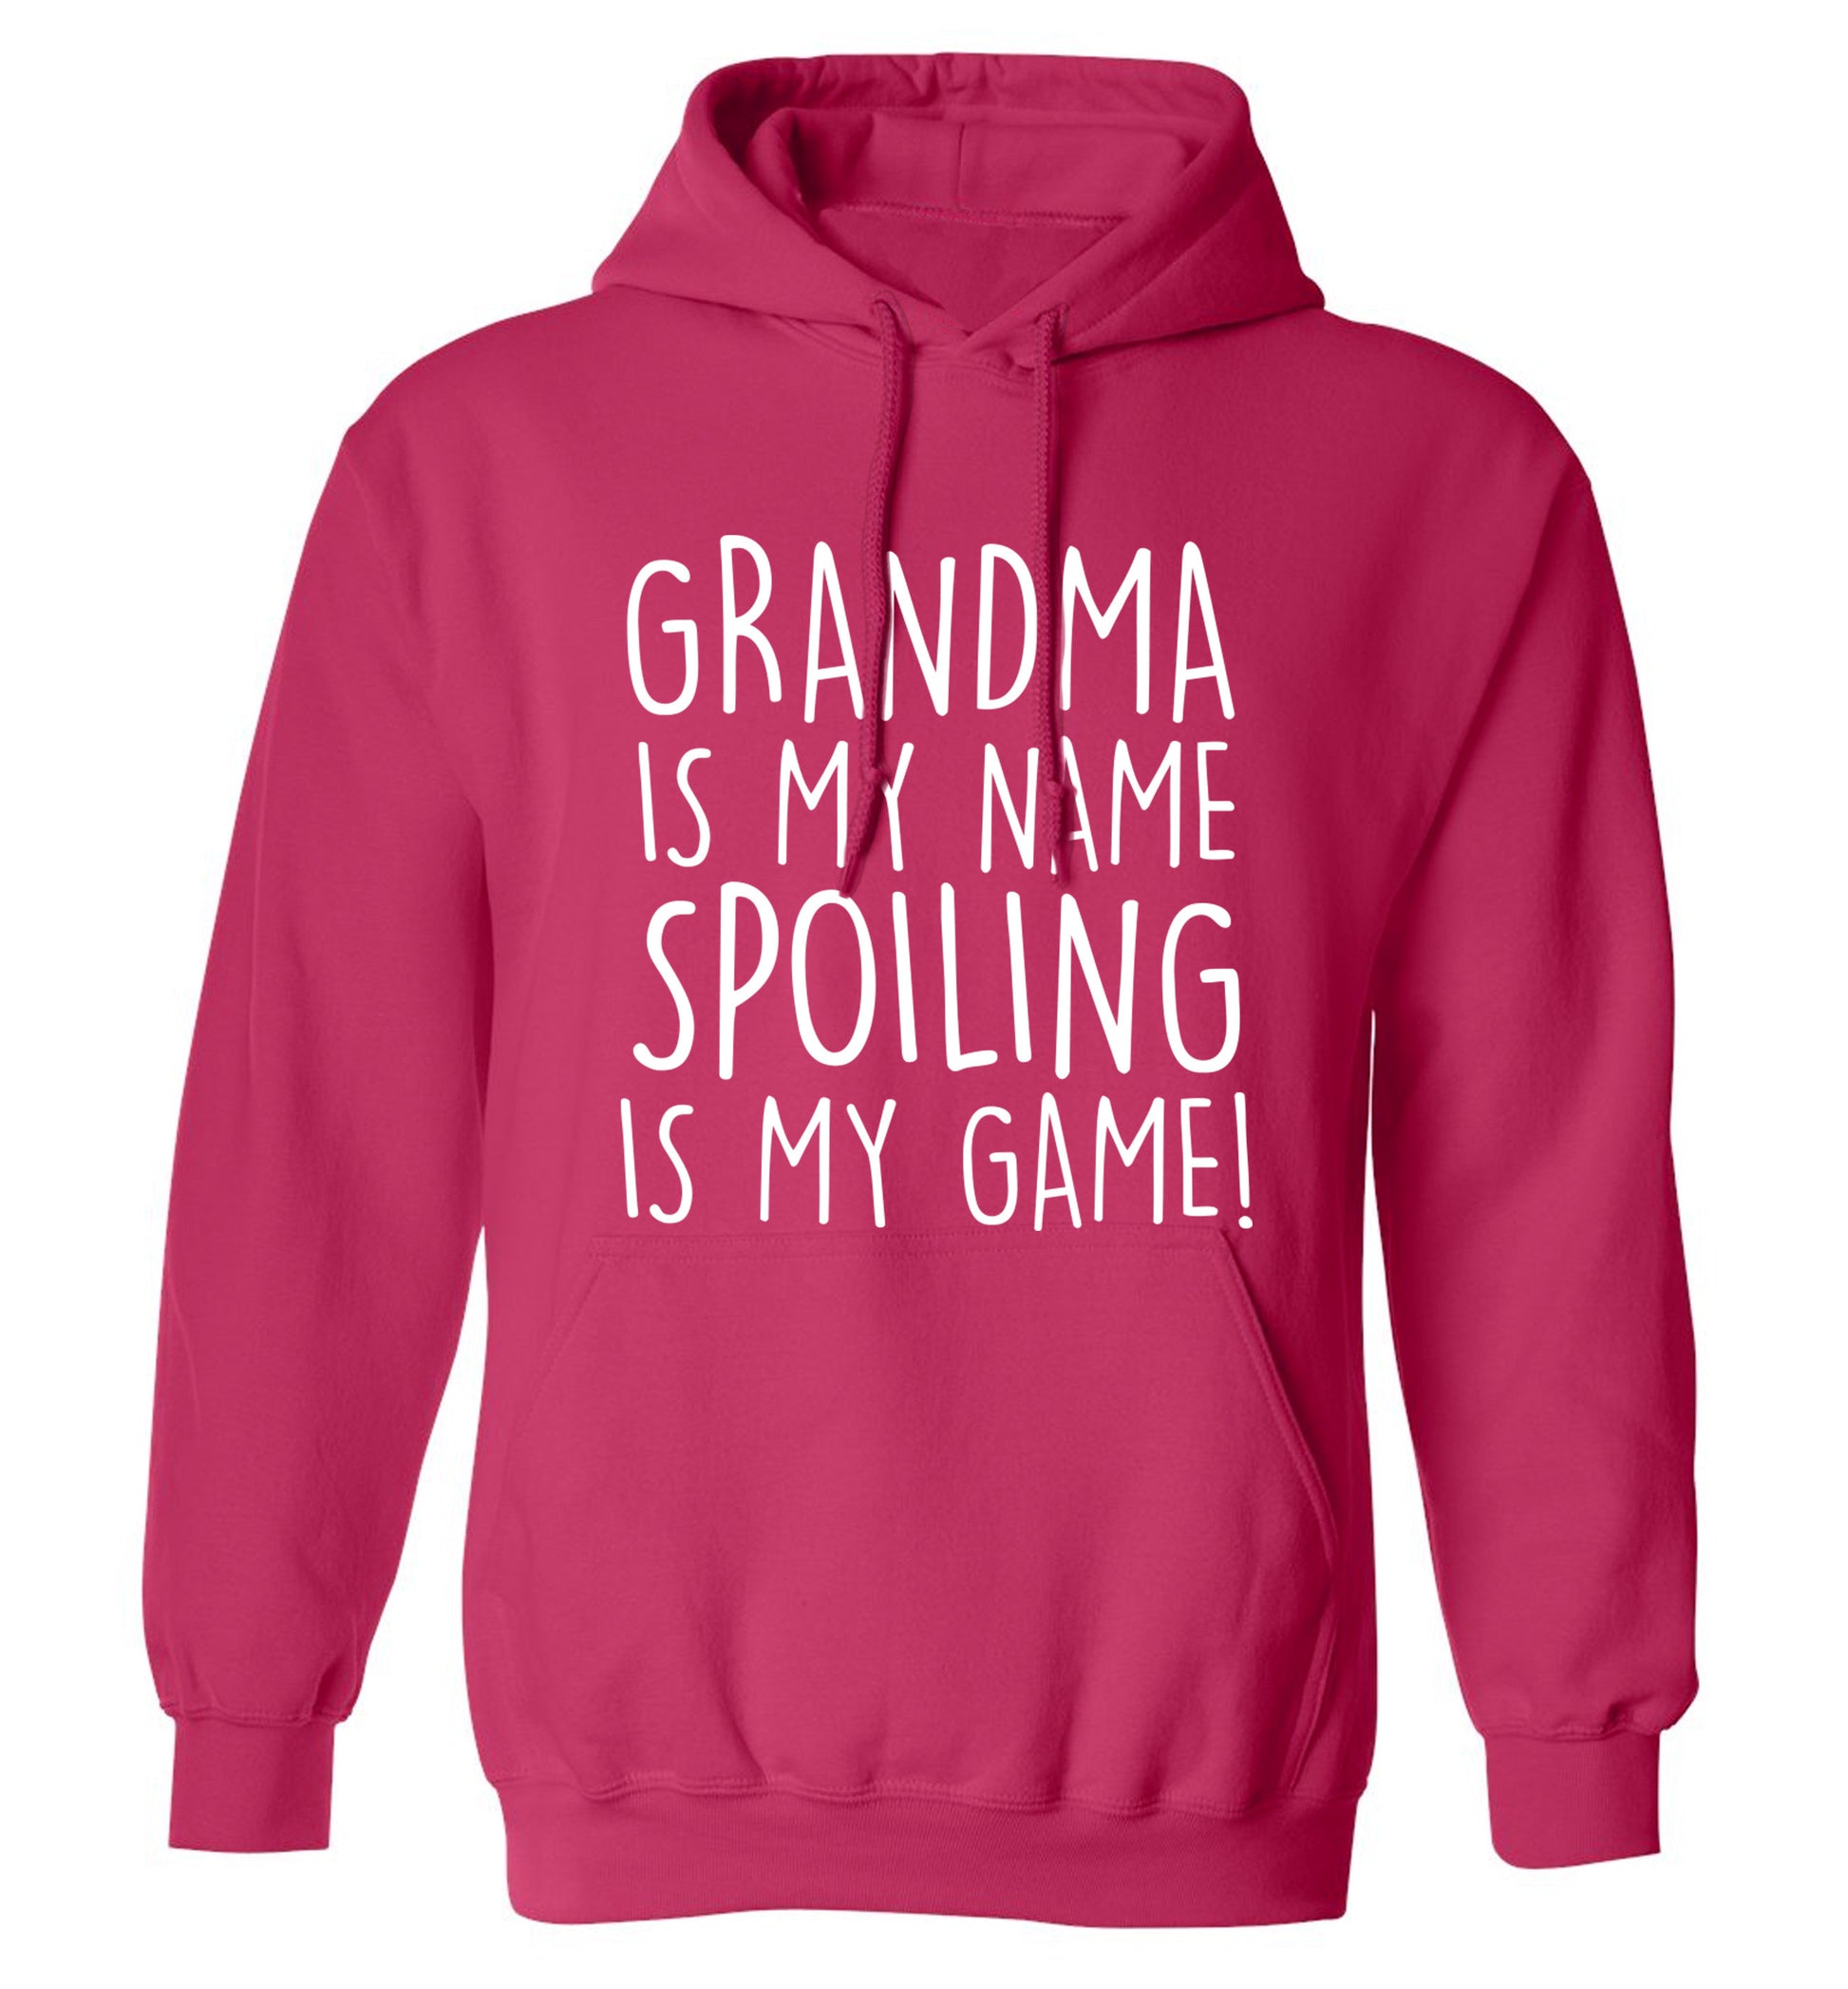 Grandma is my name, spoiling is my game adults unisex pink hoodie 2XL